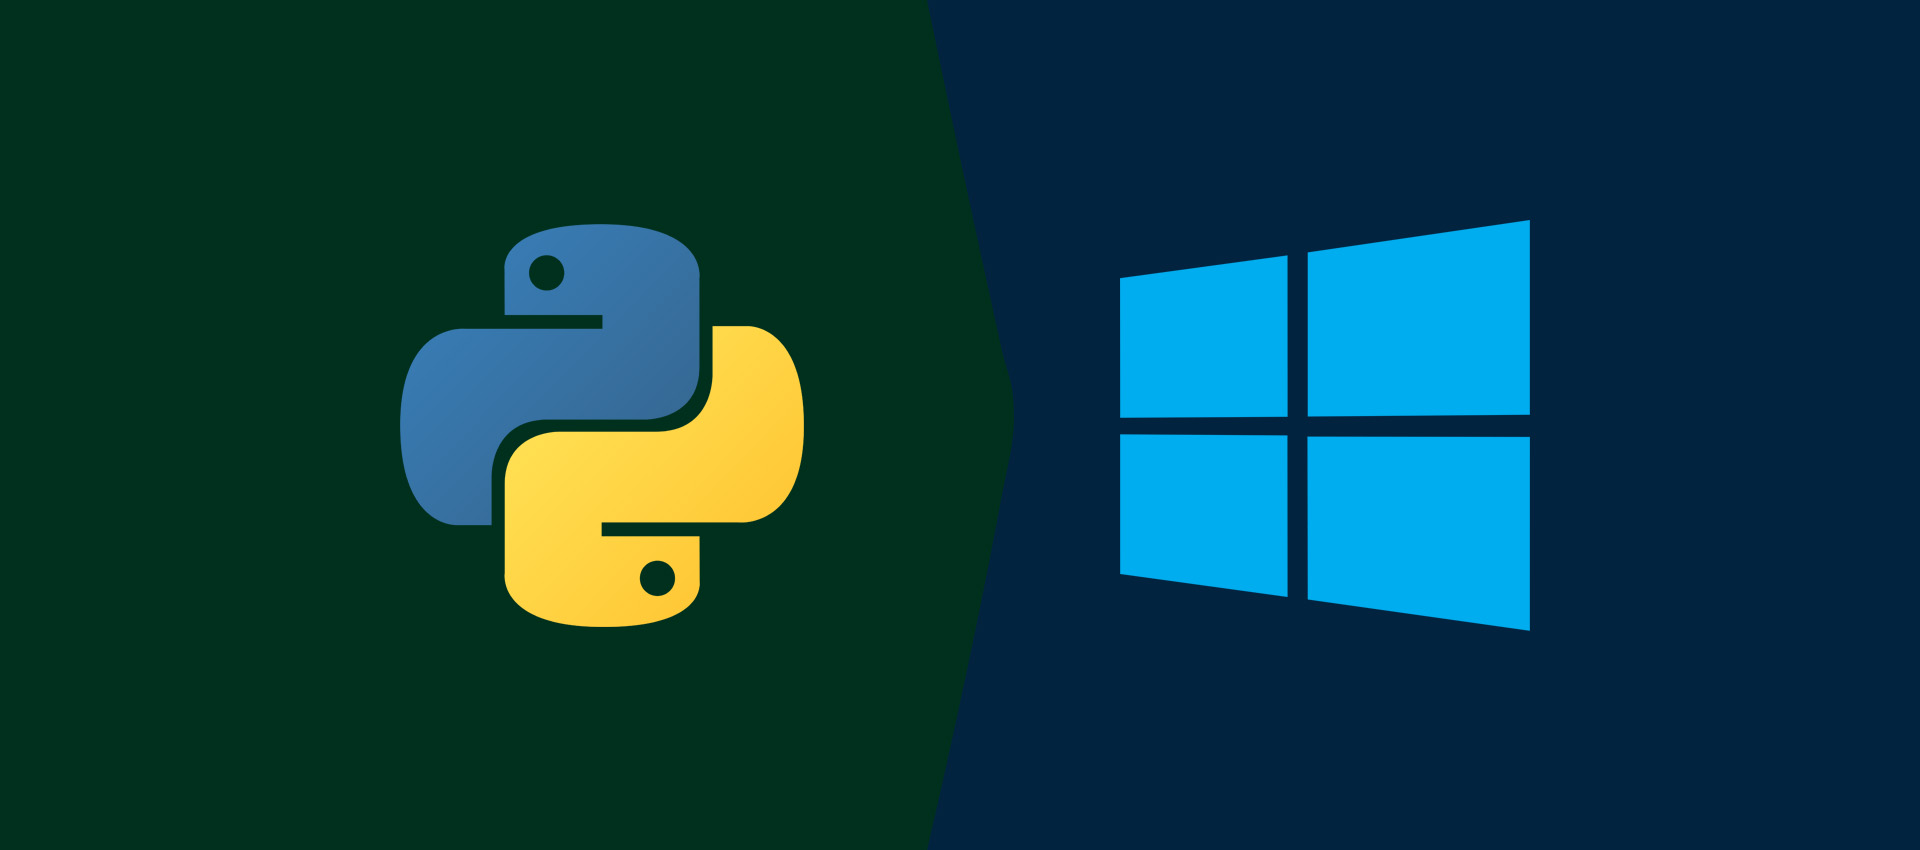 How To Install Python 3.8 On Windows